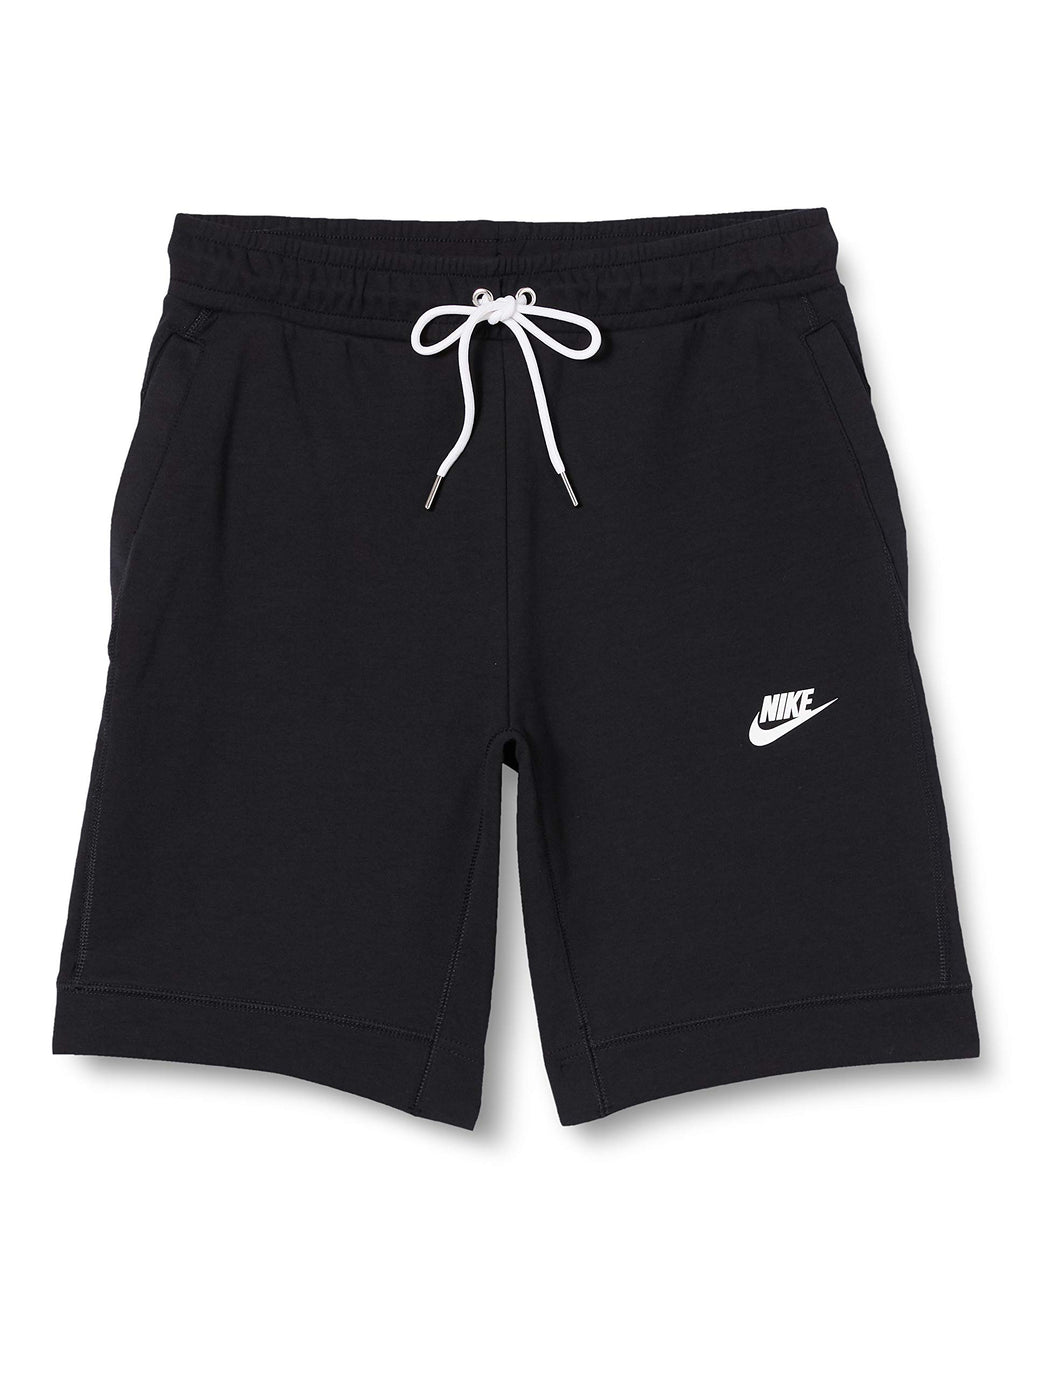 Nike Sportswear Modern FLC Shorts, Uomo Unisex Bambini, Black/Ice Silver/White/White, XL